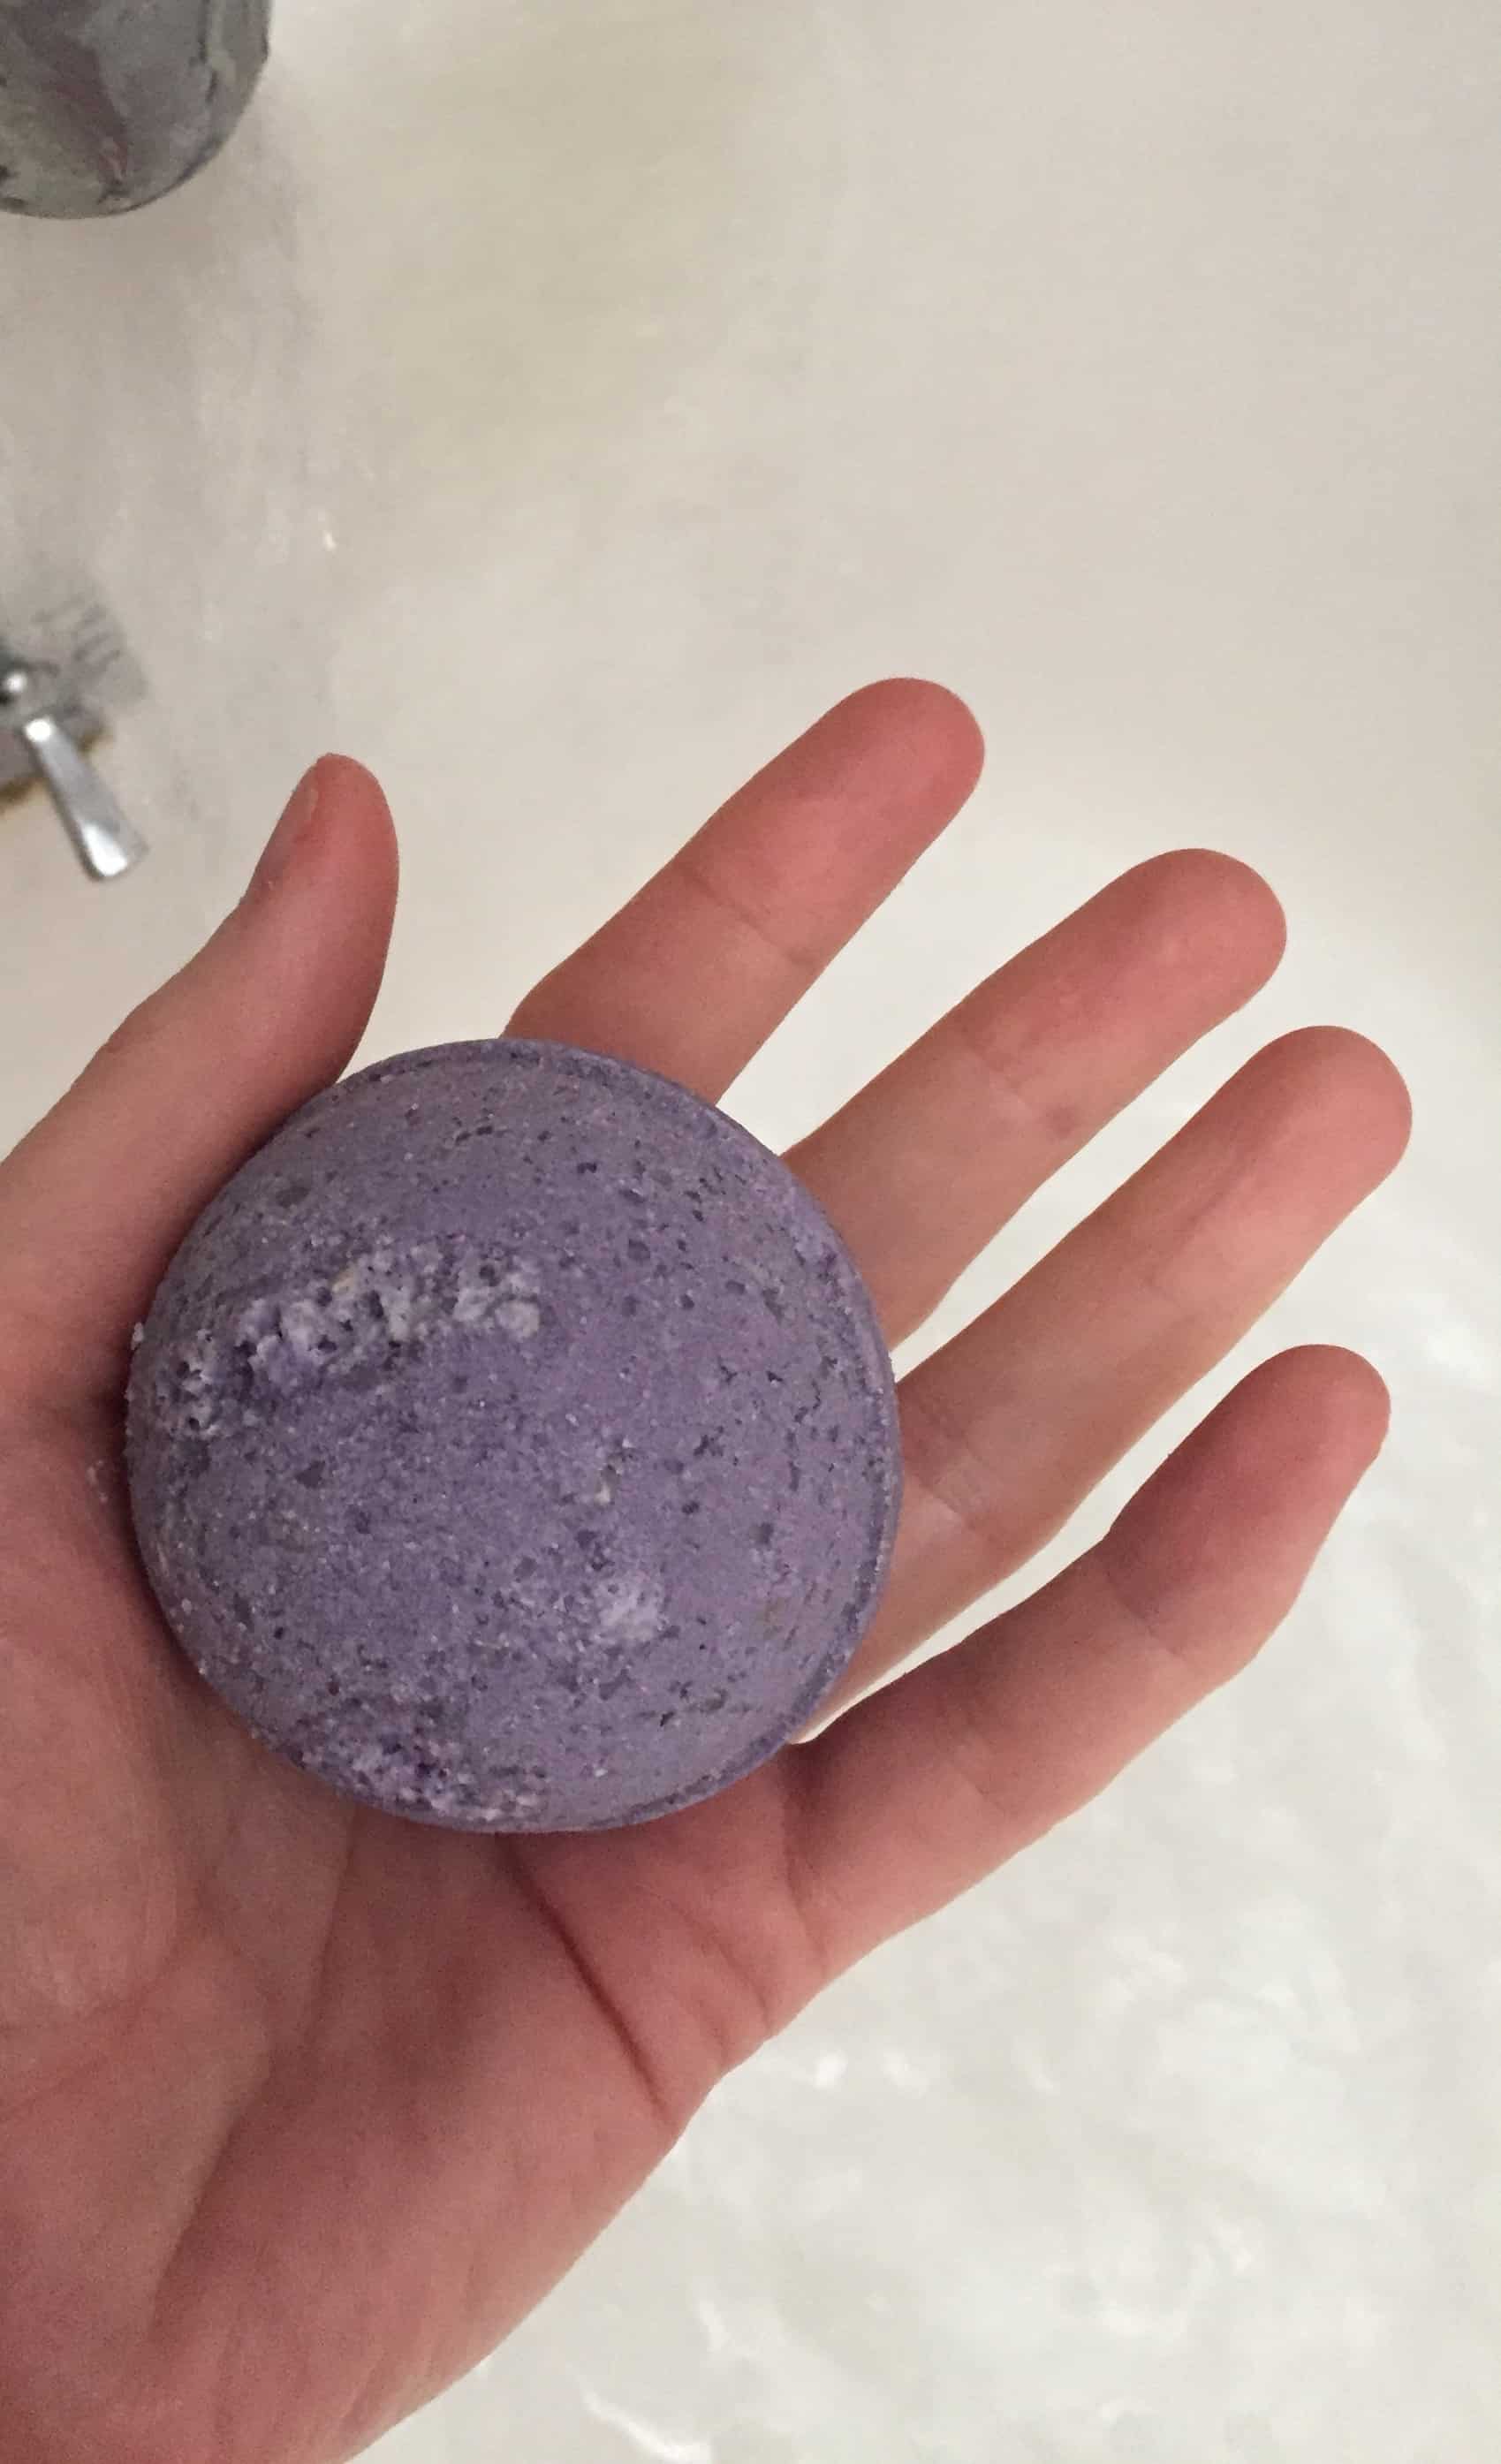 enflower cbd bath bomb utopia lavender save on cannabis testing process